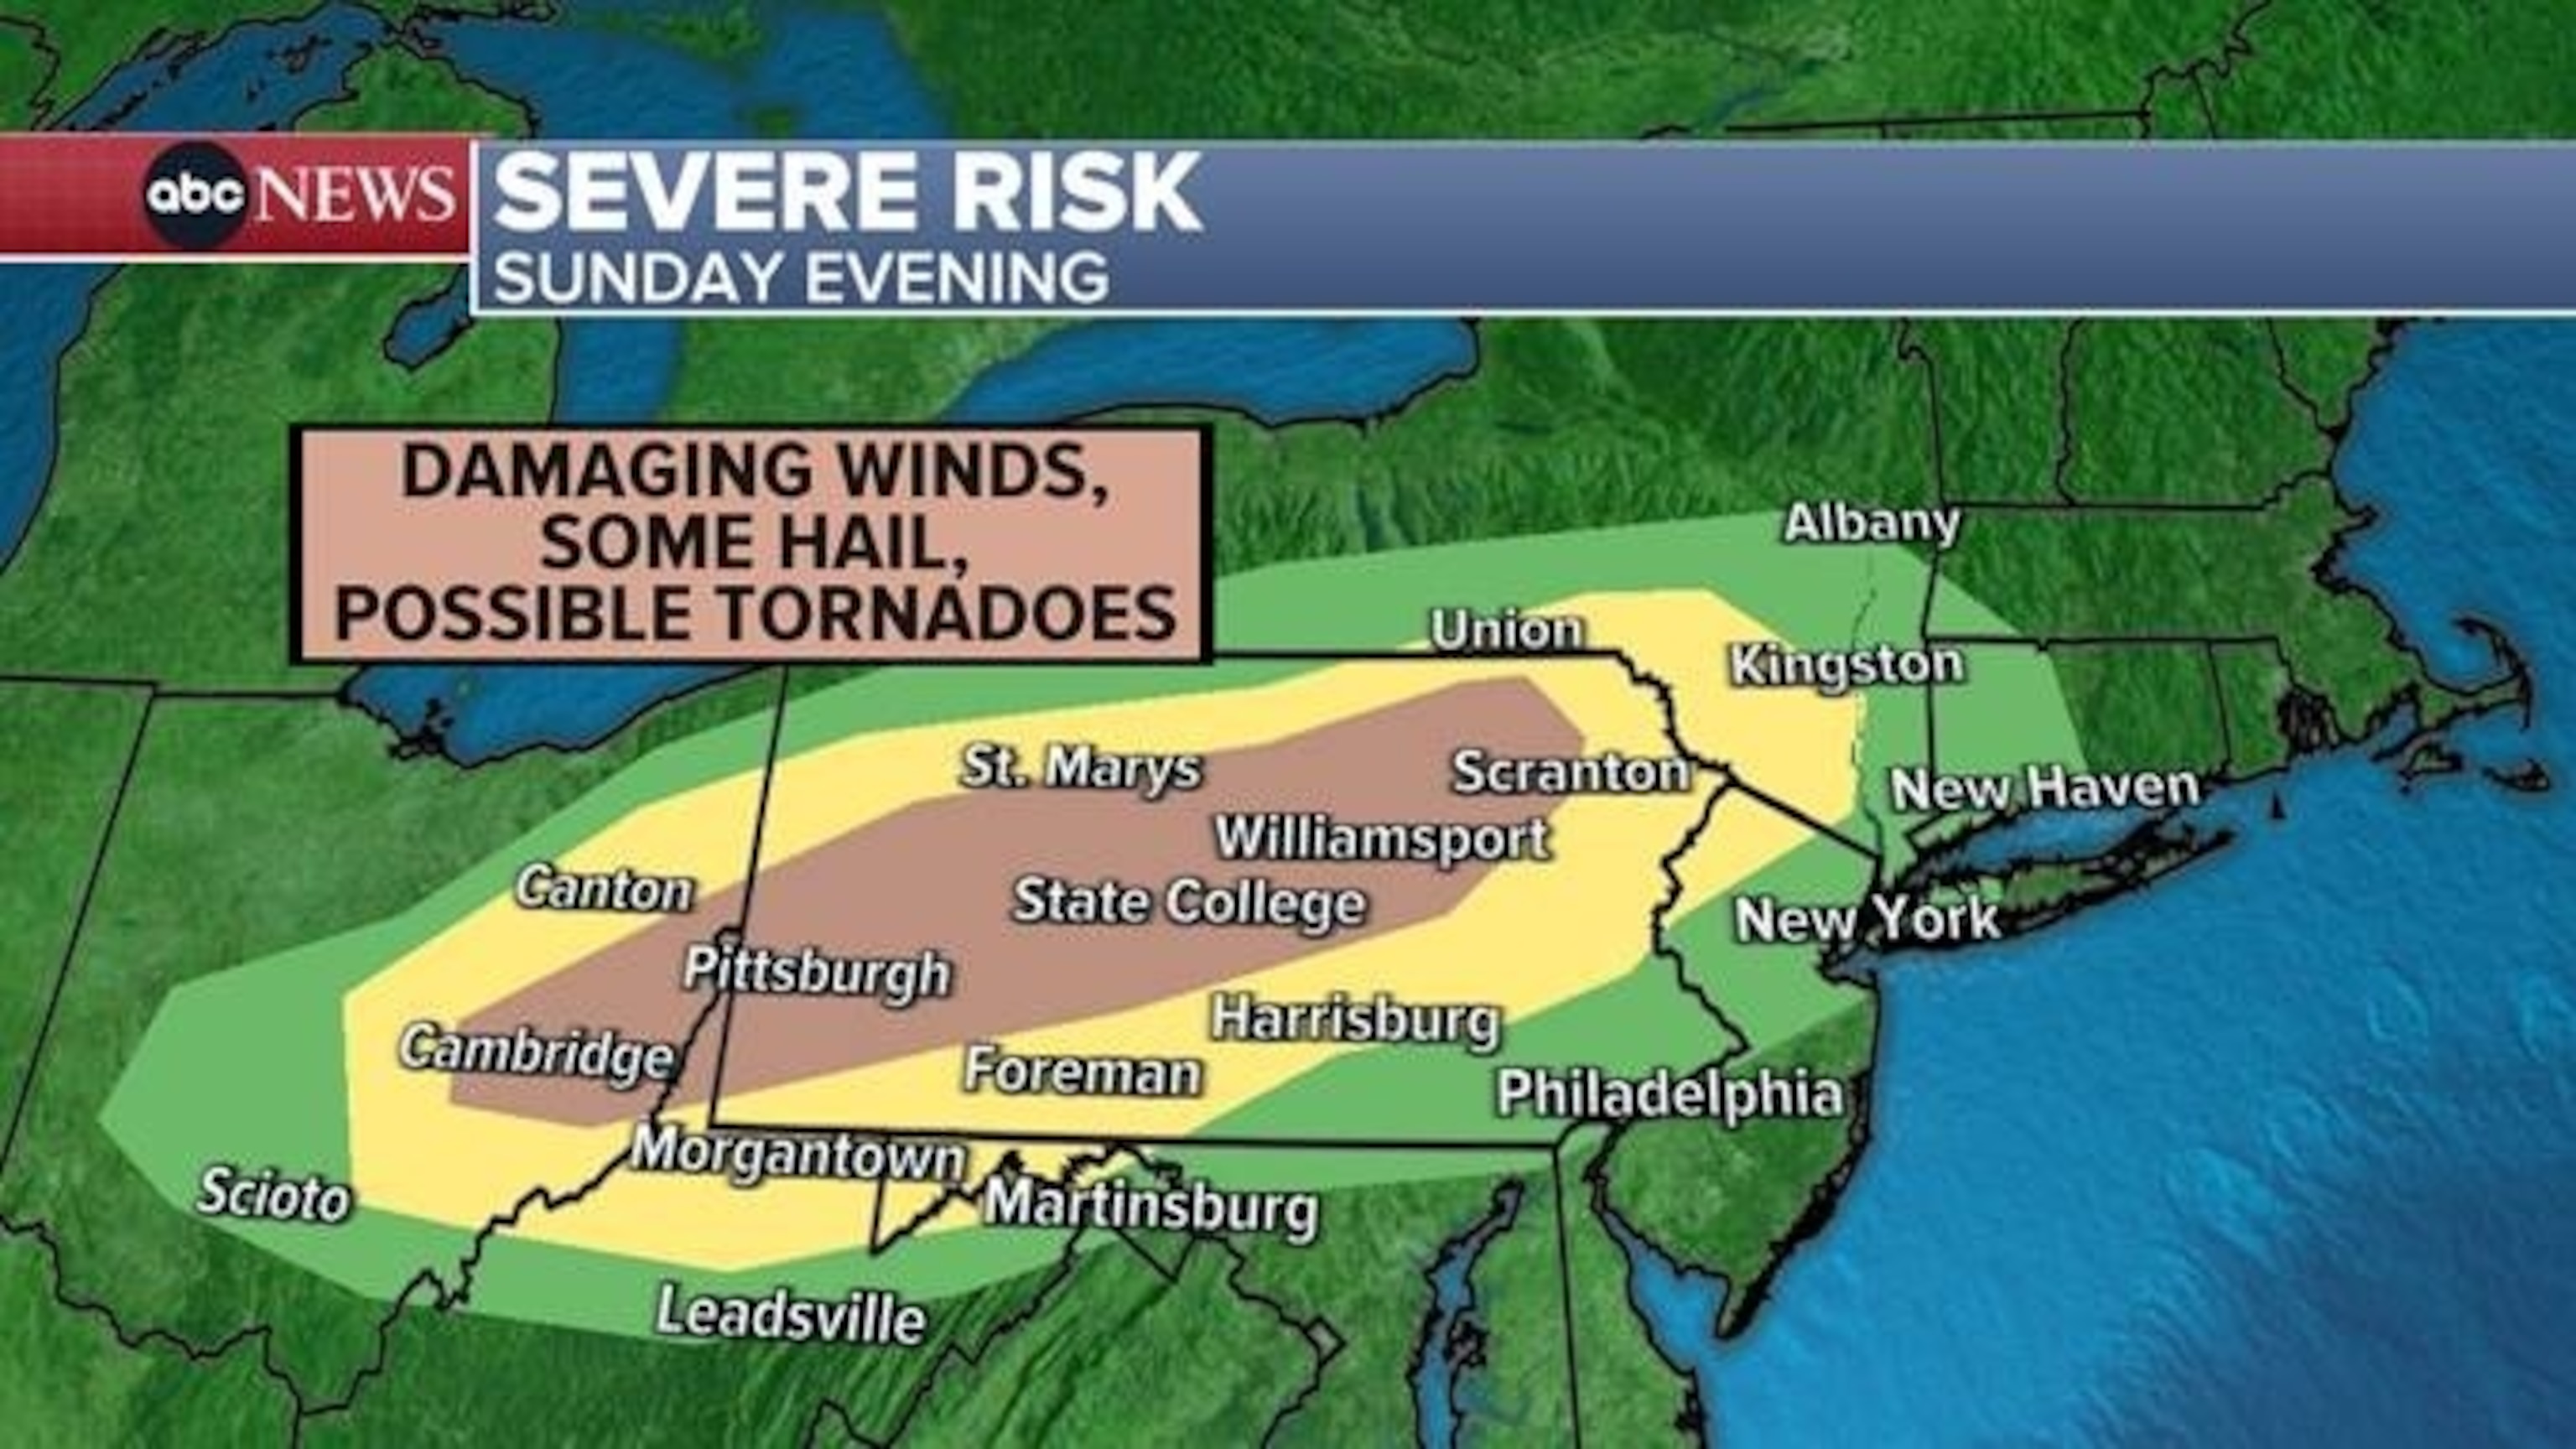 PHOTO: Severe risk forecast for Sunday evening.